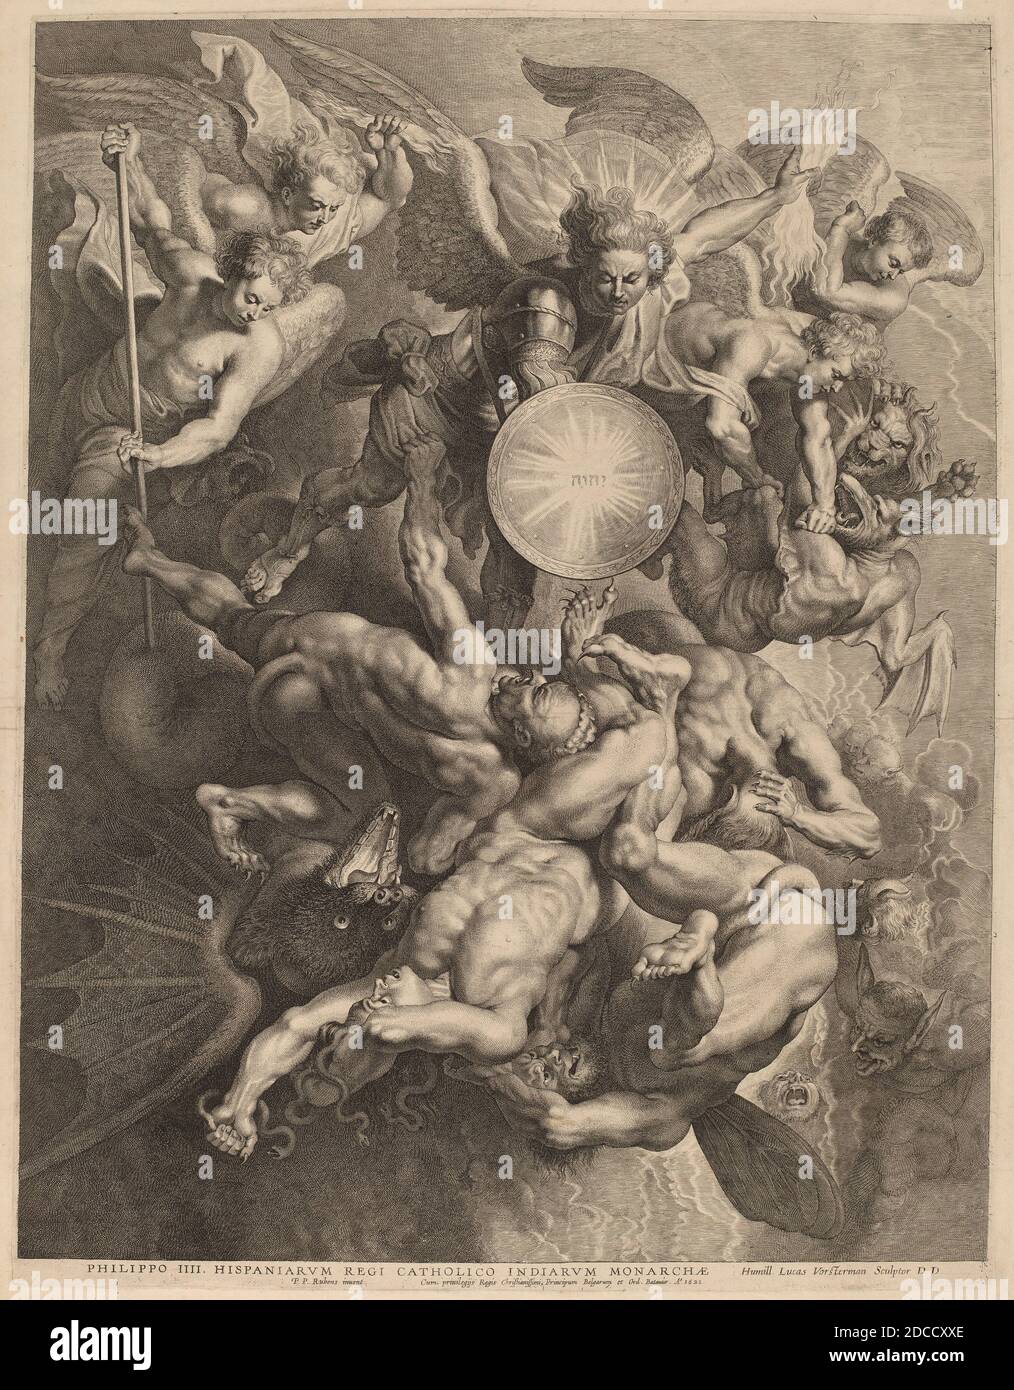 Lucas Emil Vorsterman, (artista), fiammingo, 1595 - 1675, Sir Peter Paul Rubens, (artista dopo), fiammingo, 1577 - 1640, la caduta degli angeli ribelli, 1621, incisione su carta defilata Foto Stock